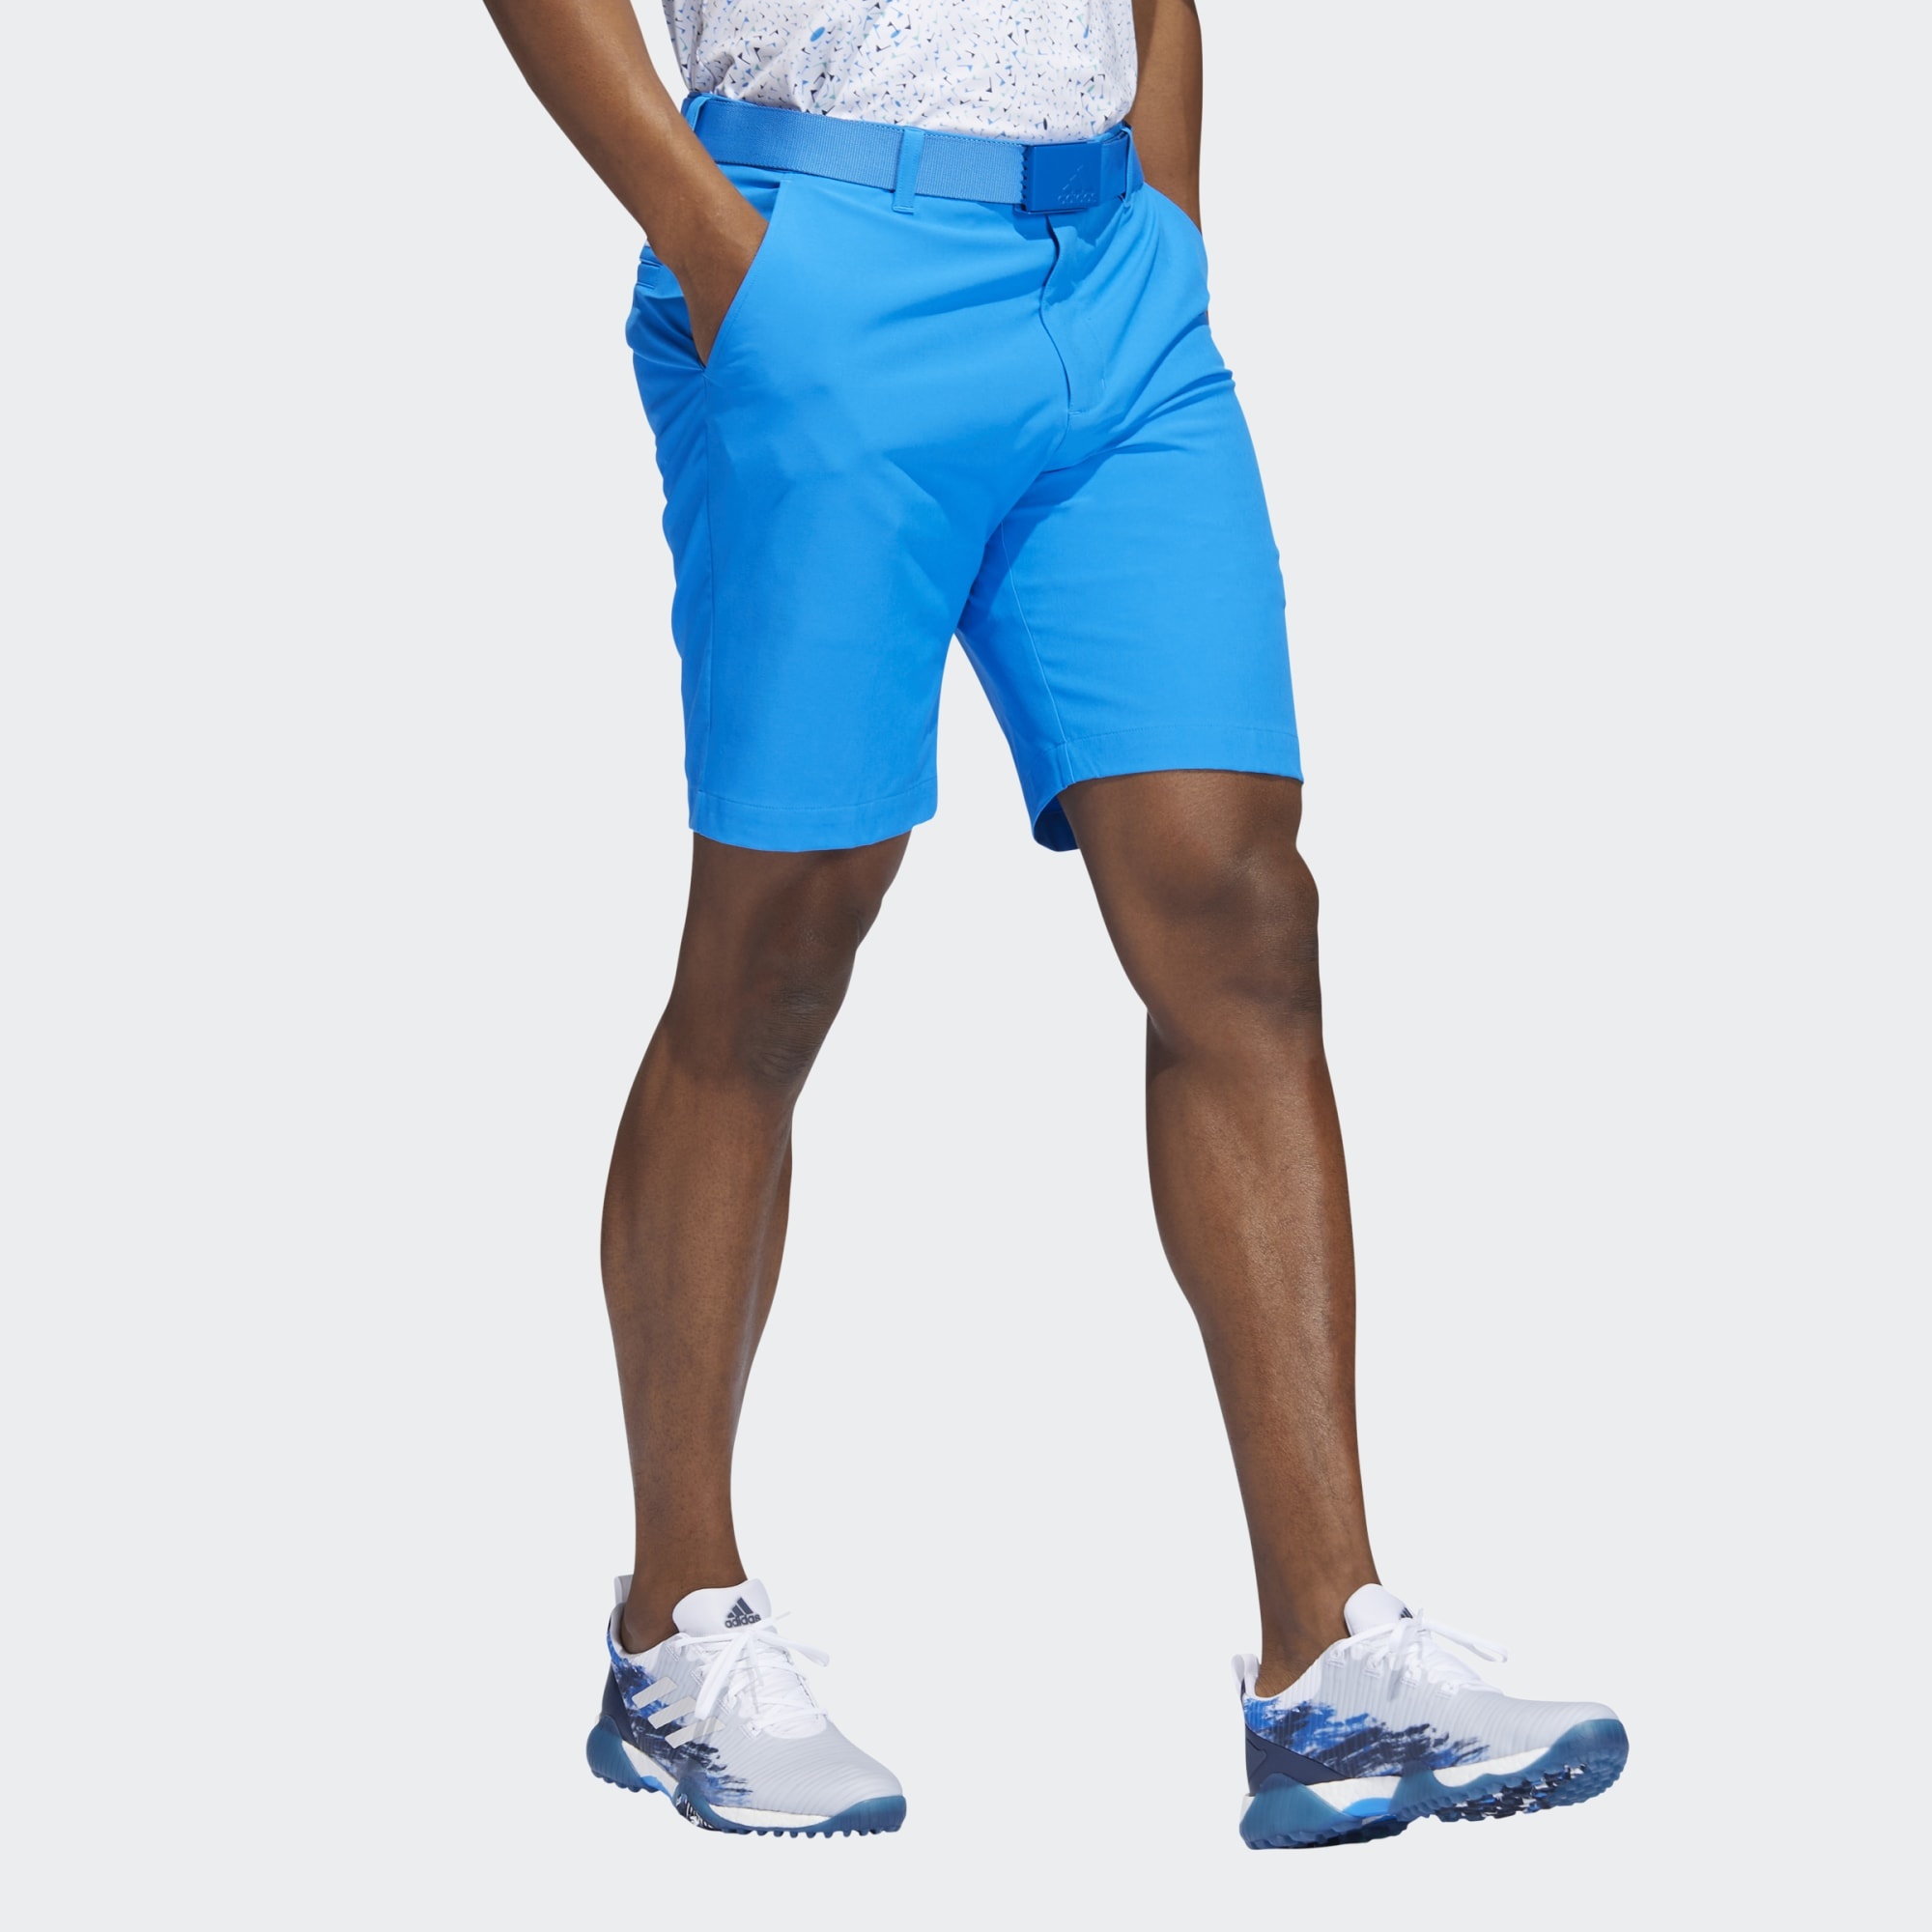 36 шорты. Ultimate365 Core 8.5-inch shorts. Шорты мужские c365 short.